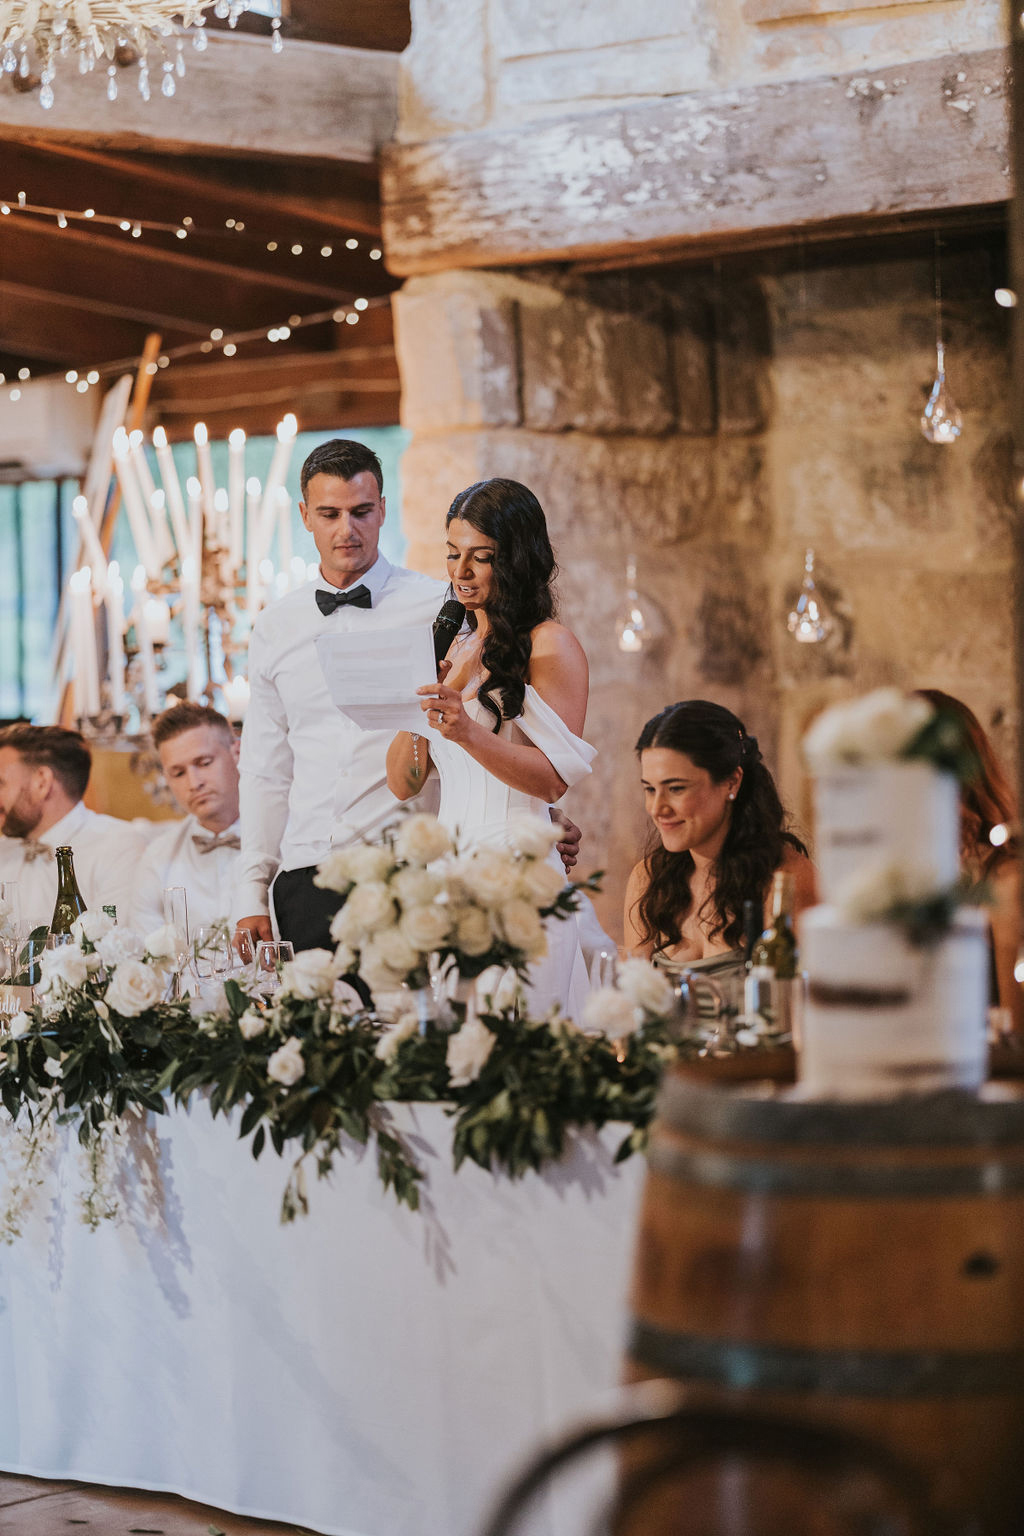 Hunter Valley Wedding Planner - Real Wedding: Jelena + Thomas. Peppers Creek Chapel & Barrel Room. Photos by Zee & Cee Studio